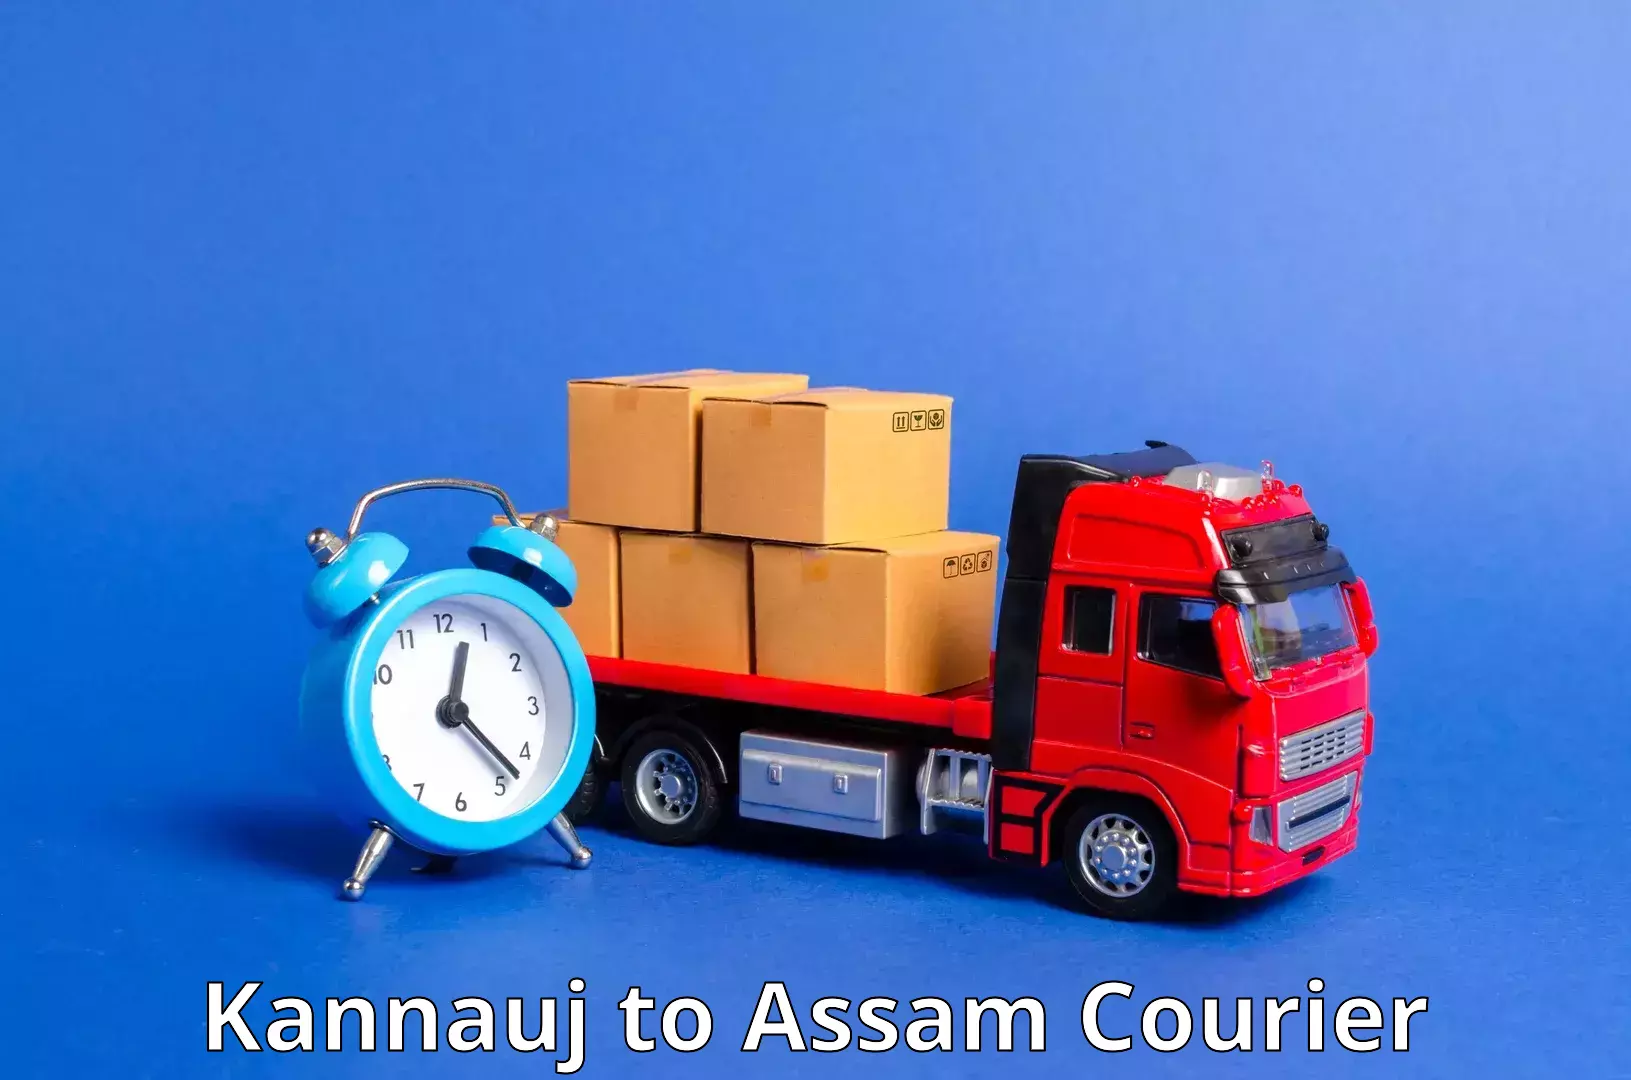 User-friendly courier app Kannauj to Silchar